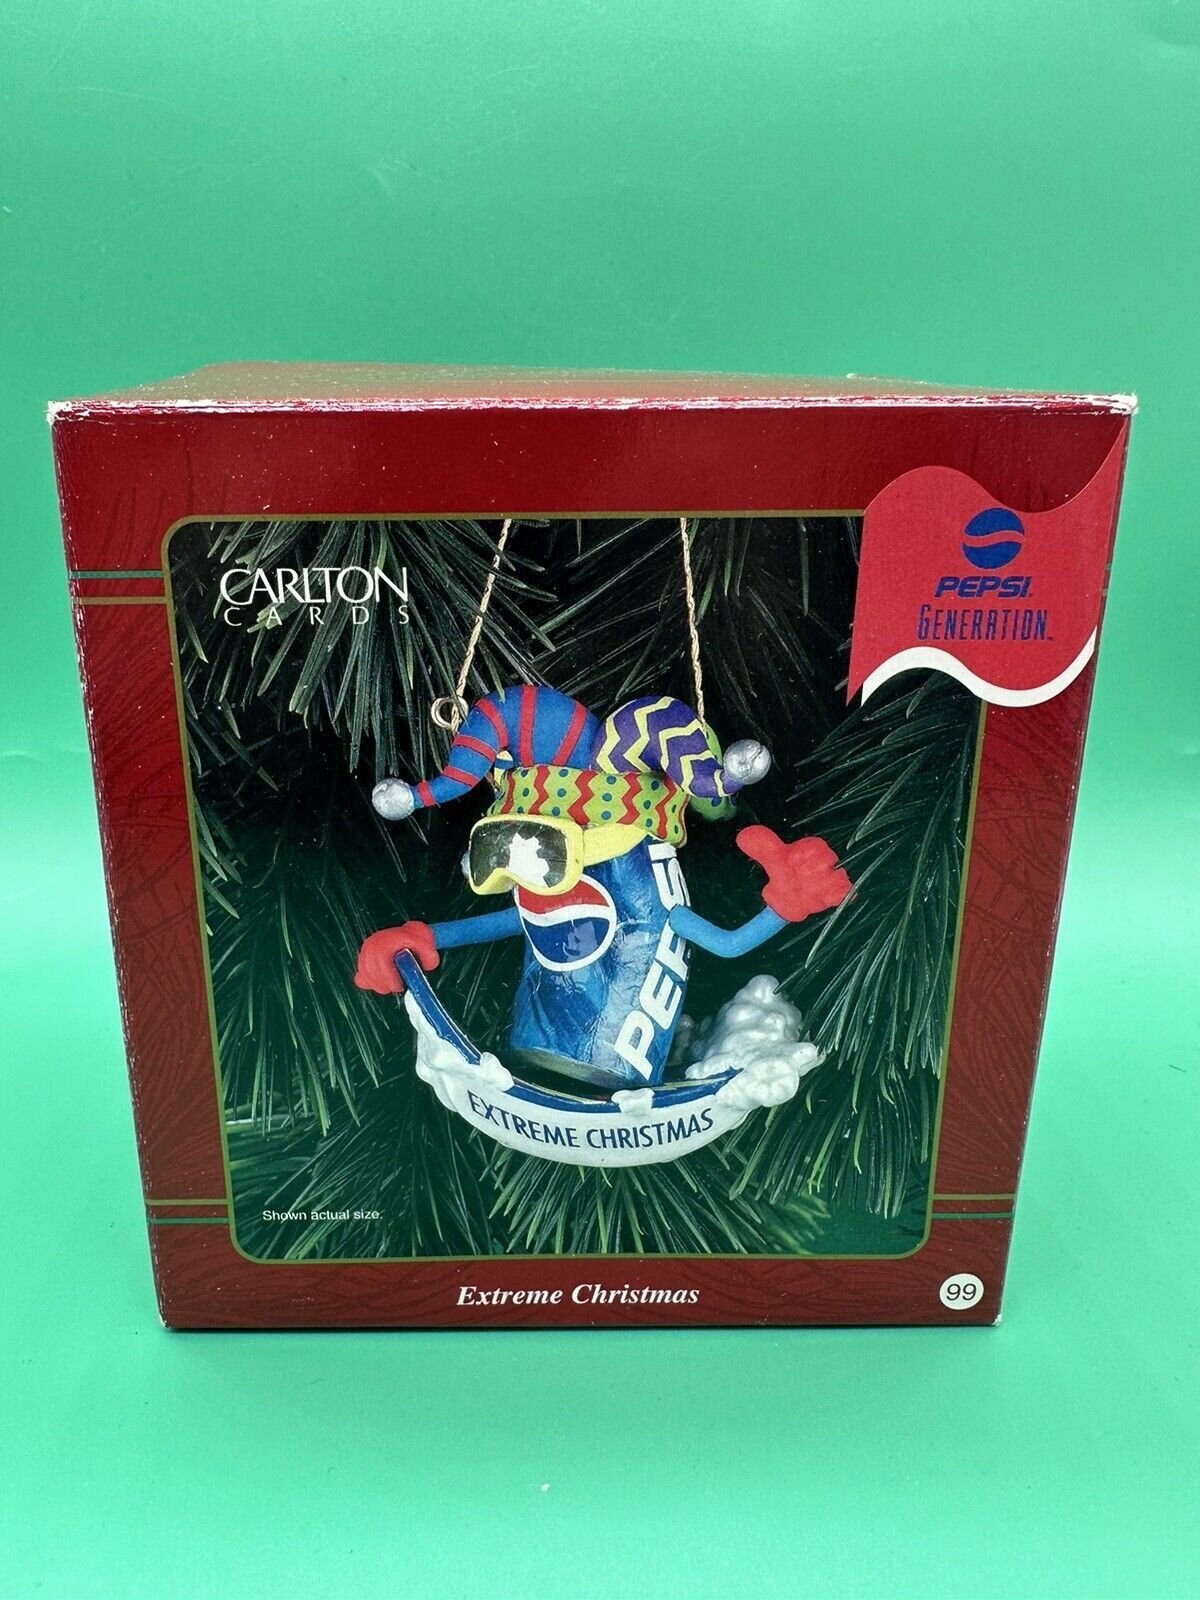 RARE CARLTON CARDS Heirloom COLLECTION 1989 Pepsi Extreme Christmas Ornament